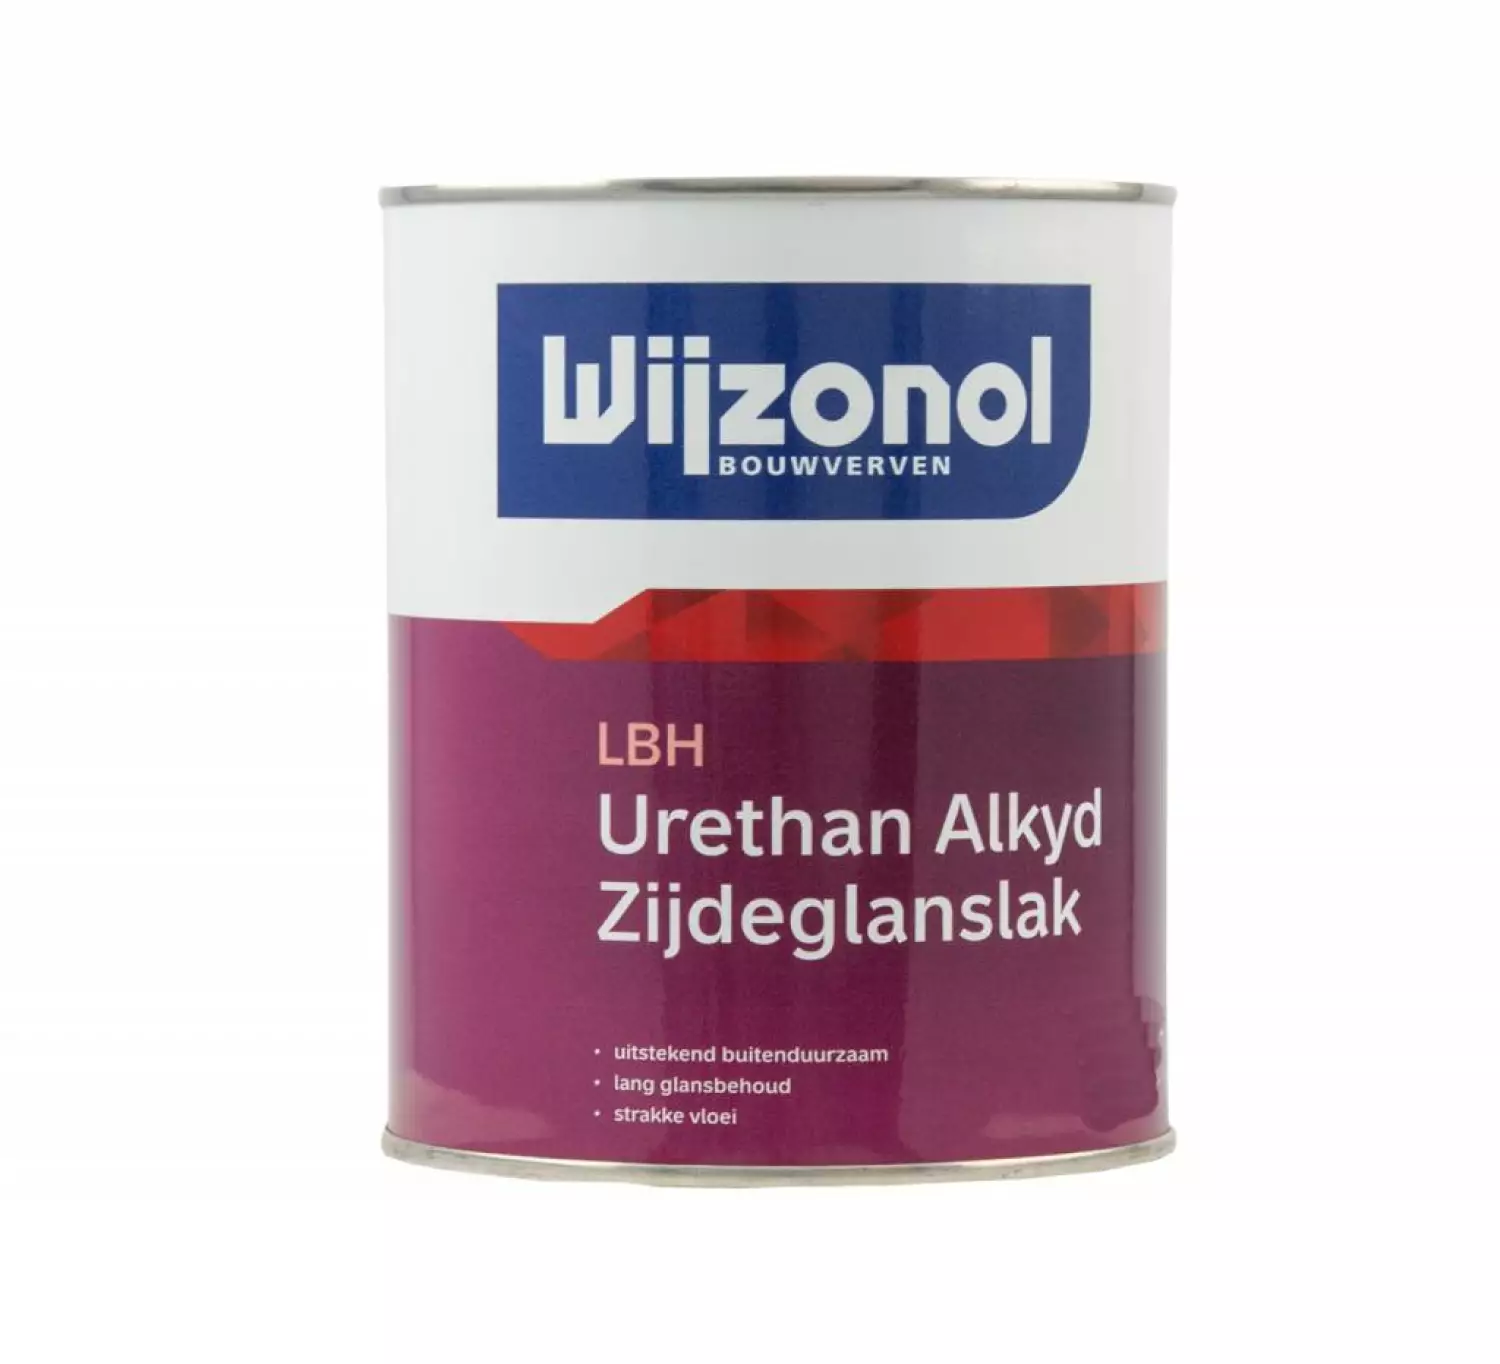 Wijzonol LBH Urethan Alkyd Zijdeglanslak - op kleur gemengd - 0,5L-image